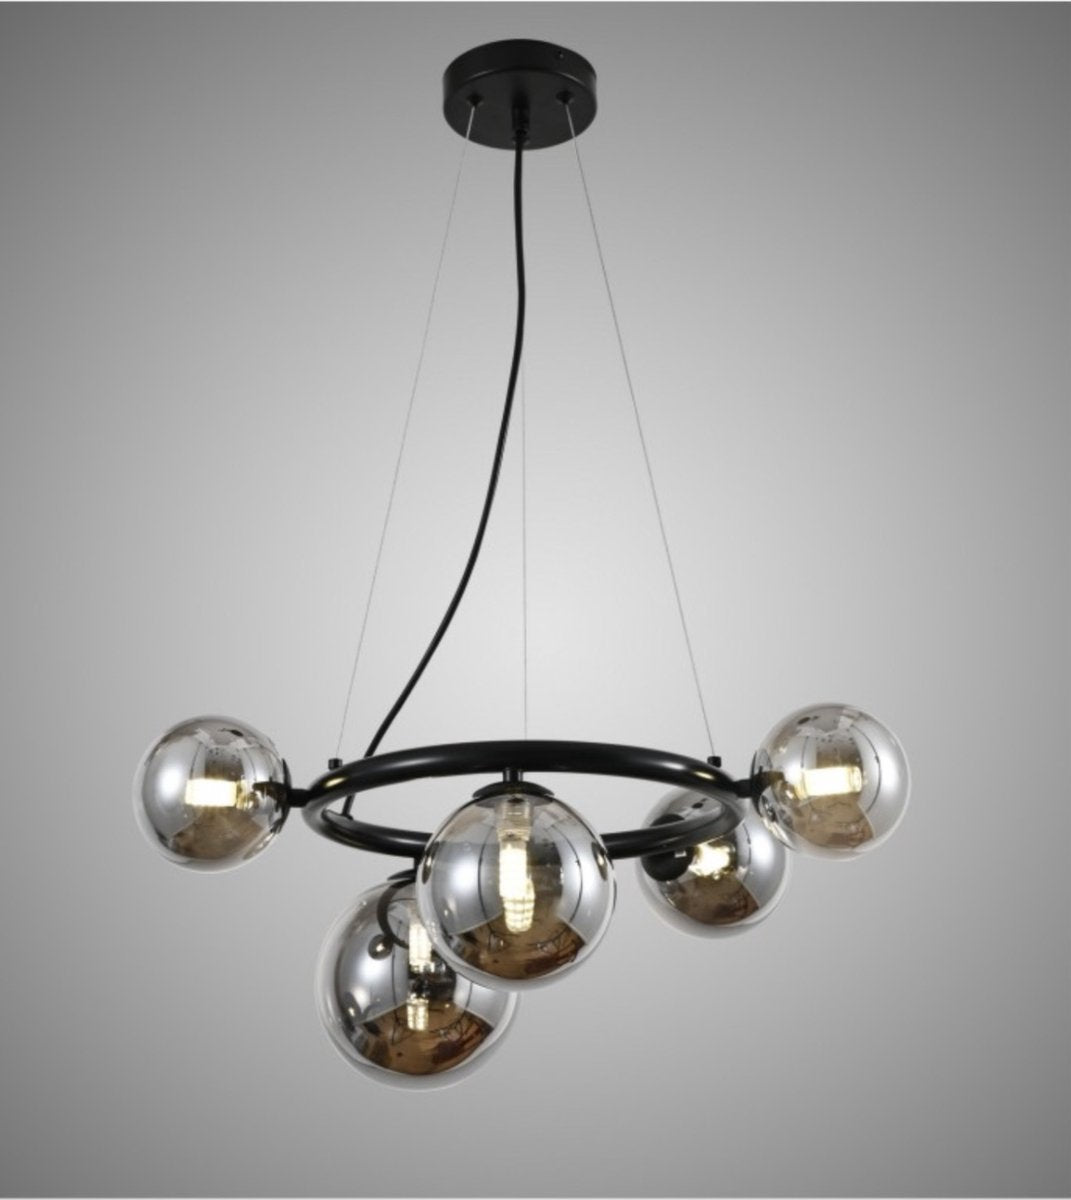 Kadirelli Industrial Ceiling Lamp - 5x G9 - 40W - Chandelier - Hanging Lamp - Luxury Black Smoked lamp